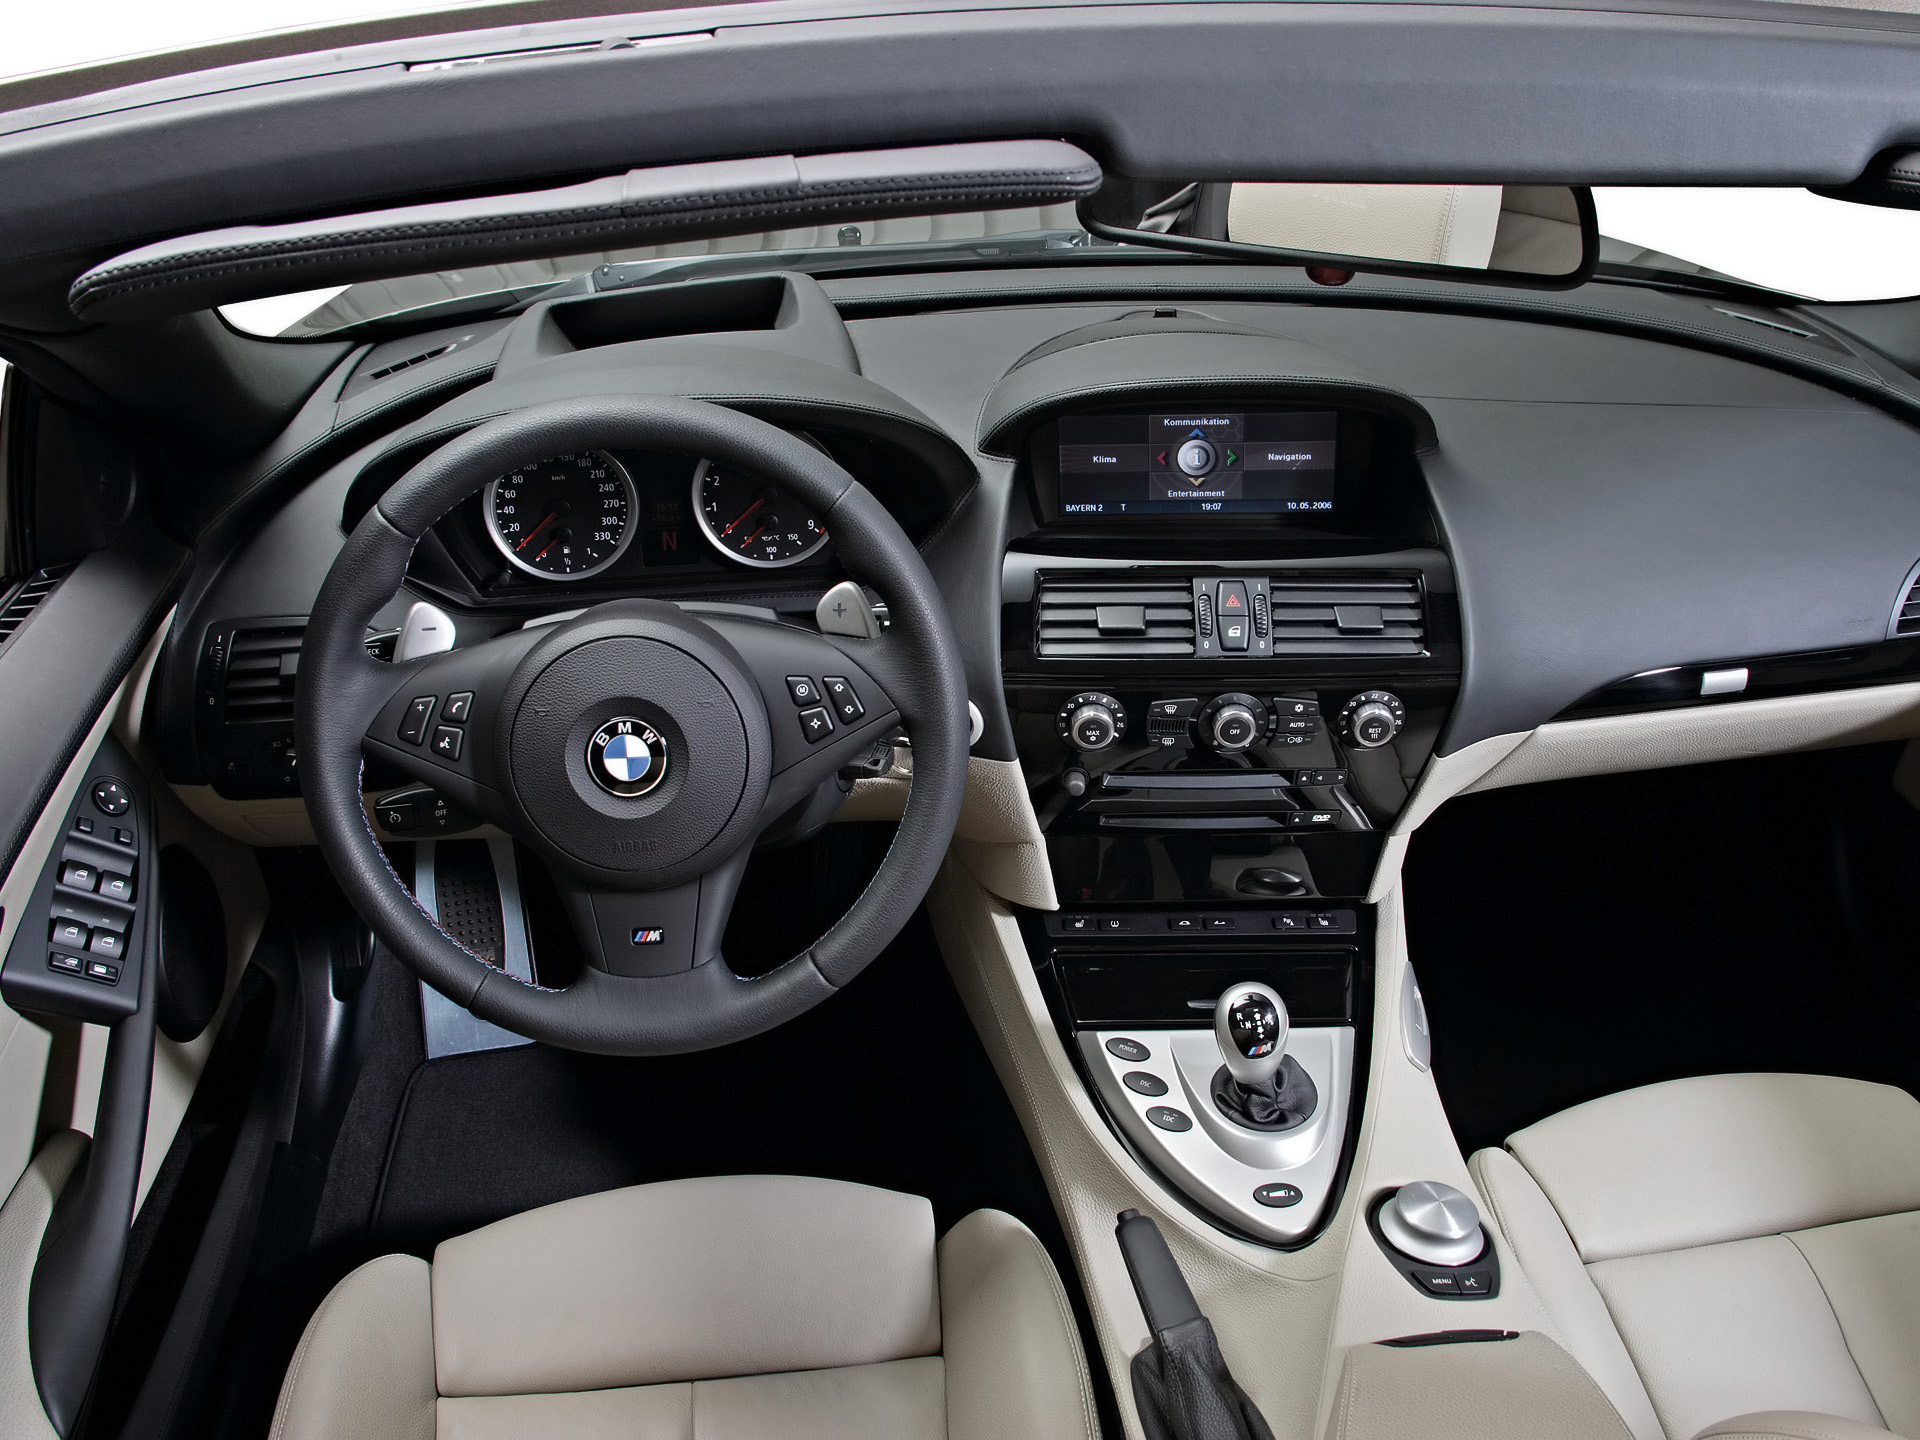 2007 BMW M6 Cabriolet Interior (+) Res: 1920x1440 / Size:648kb. Views: 89